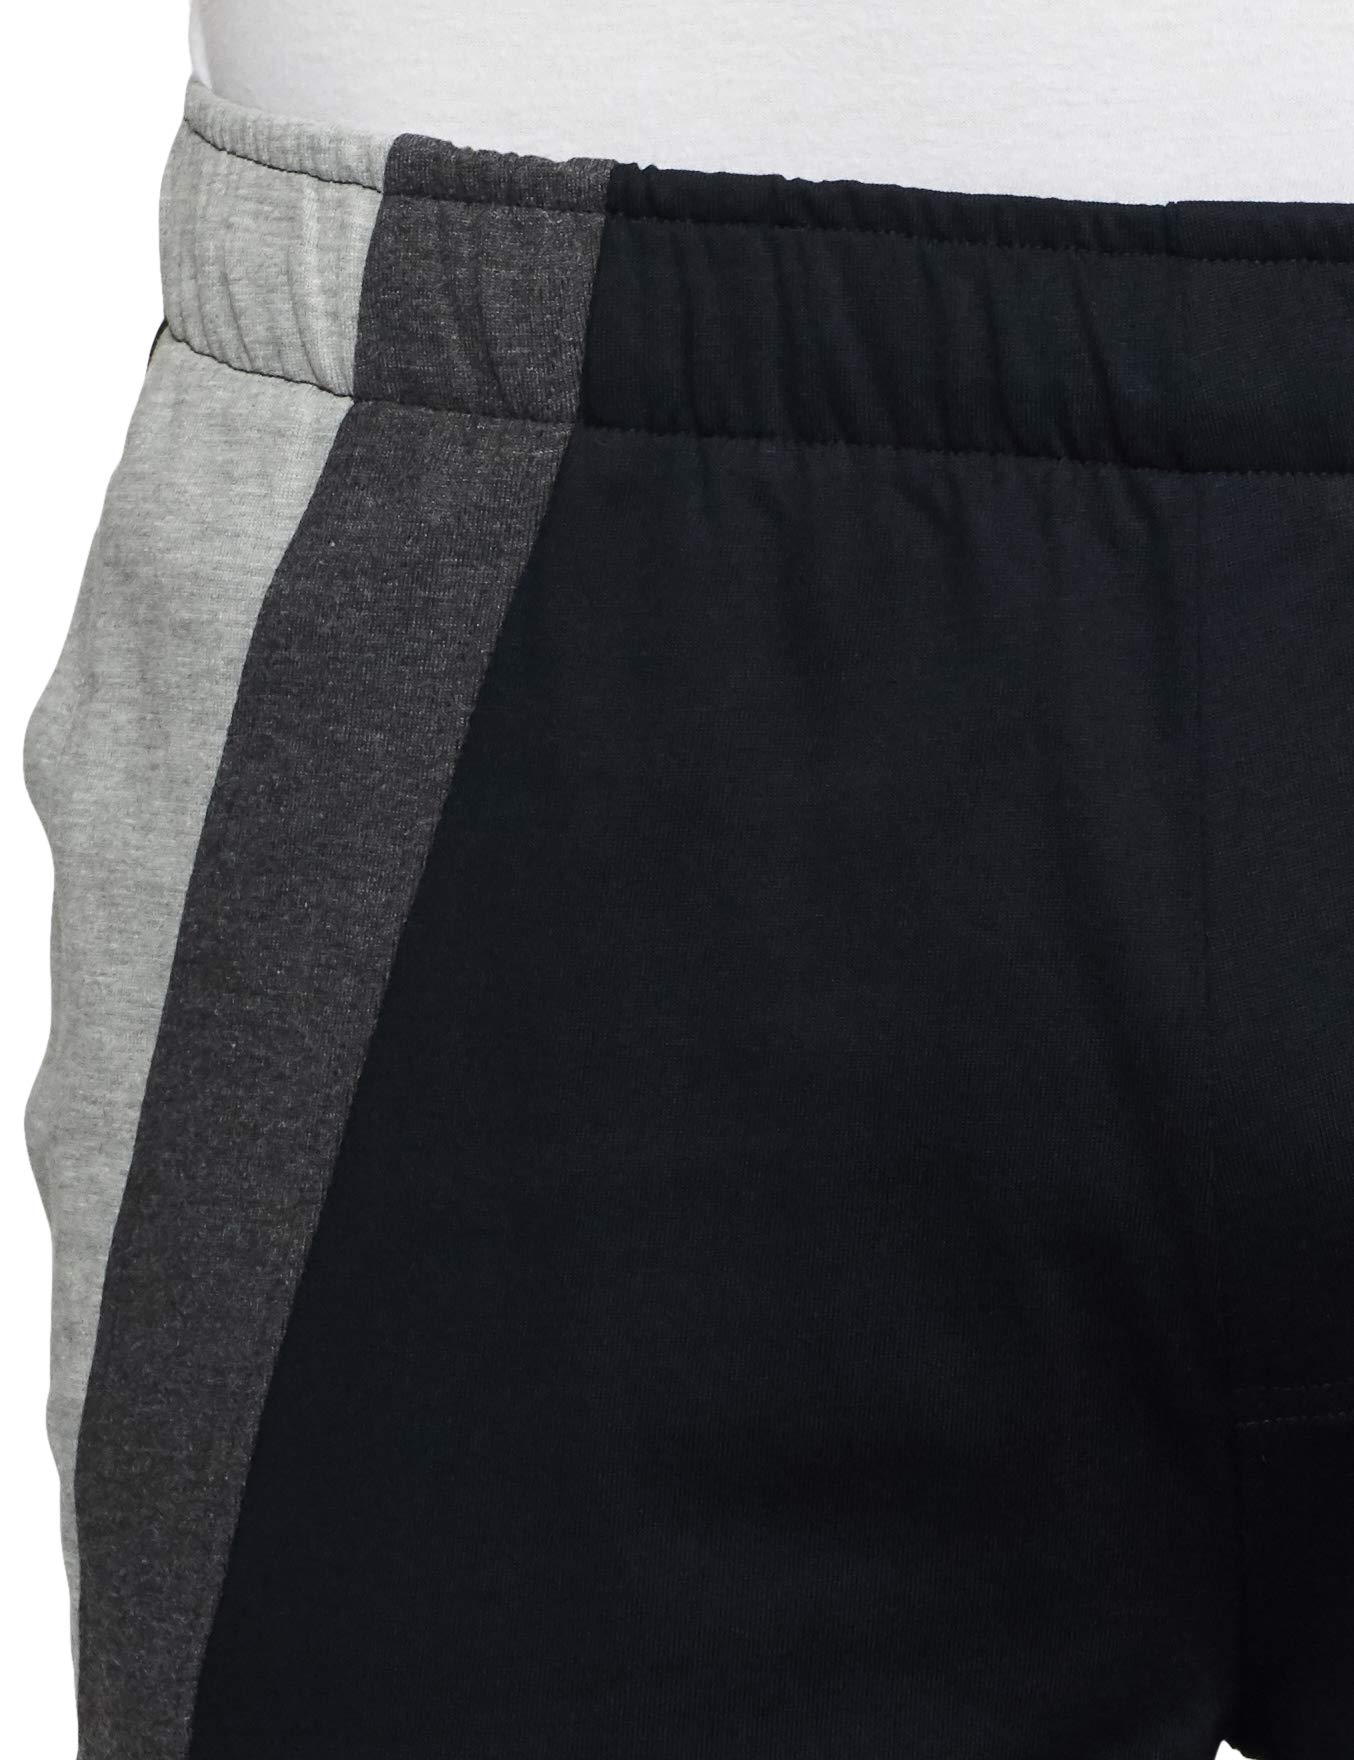 Van Heusen Athleisure Men Knit Shorts - Cotton Rich - Smart Tech, Easy Stain Release, Anti Stat, Ultra Soft, Quick Dry_50003_Black_M